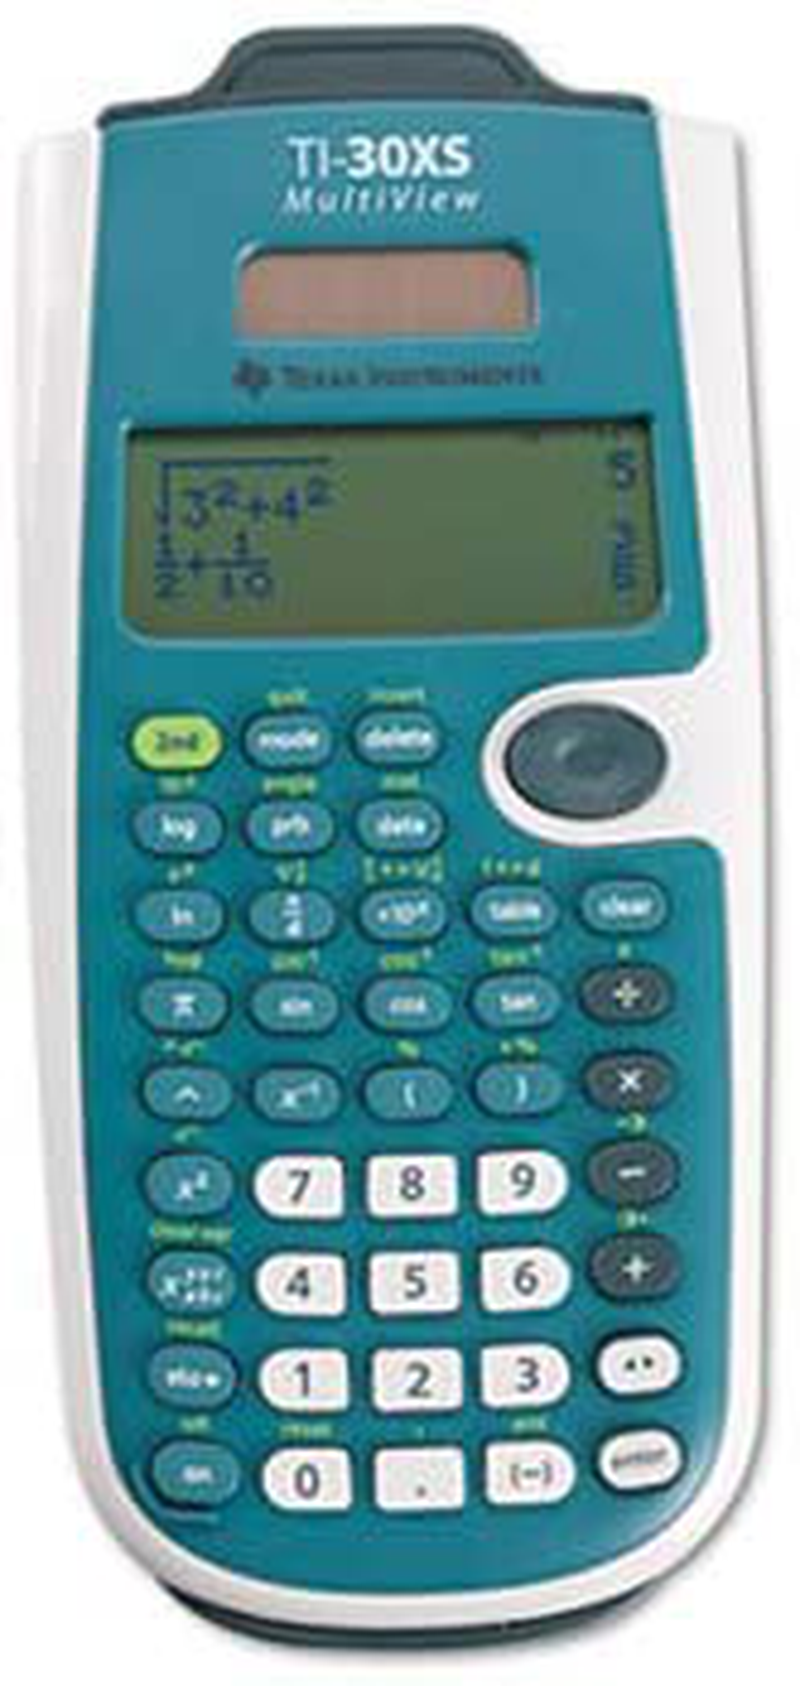 Texas Instruments Ti-30xs Multiview Scientific Calculator, 16-Digit LCD